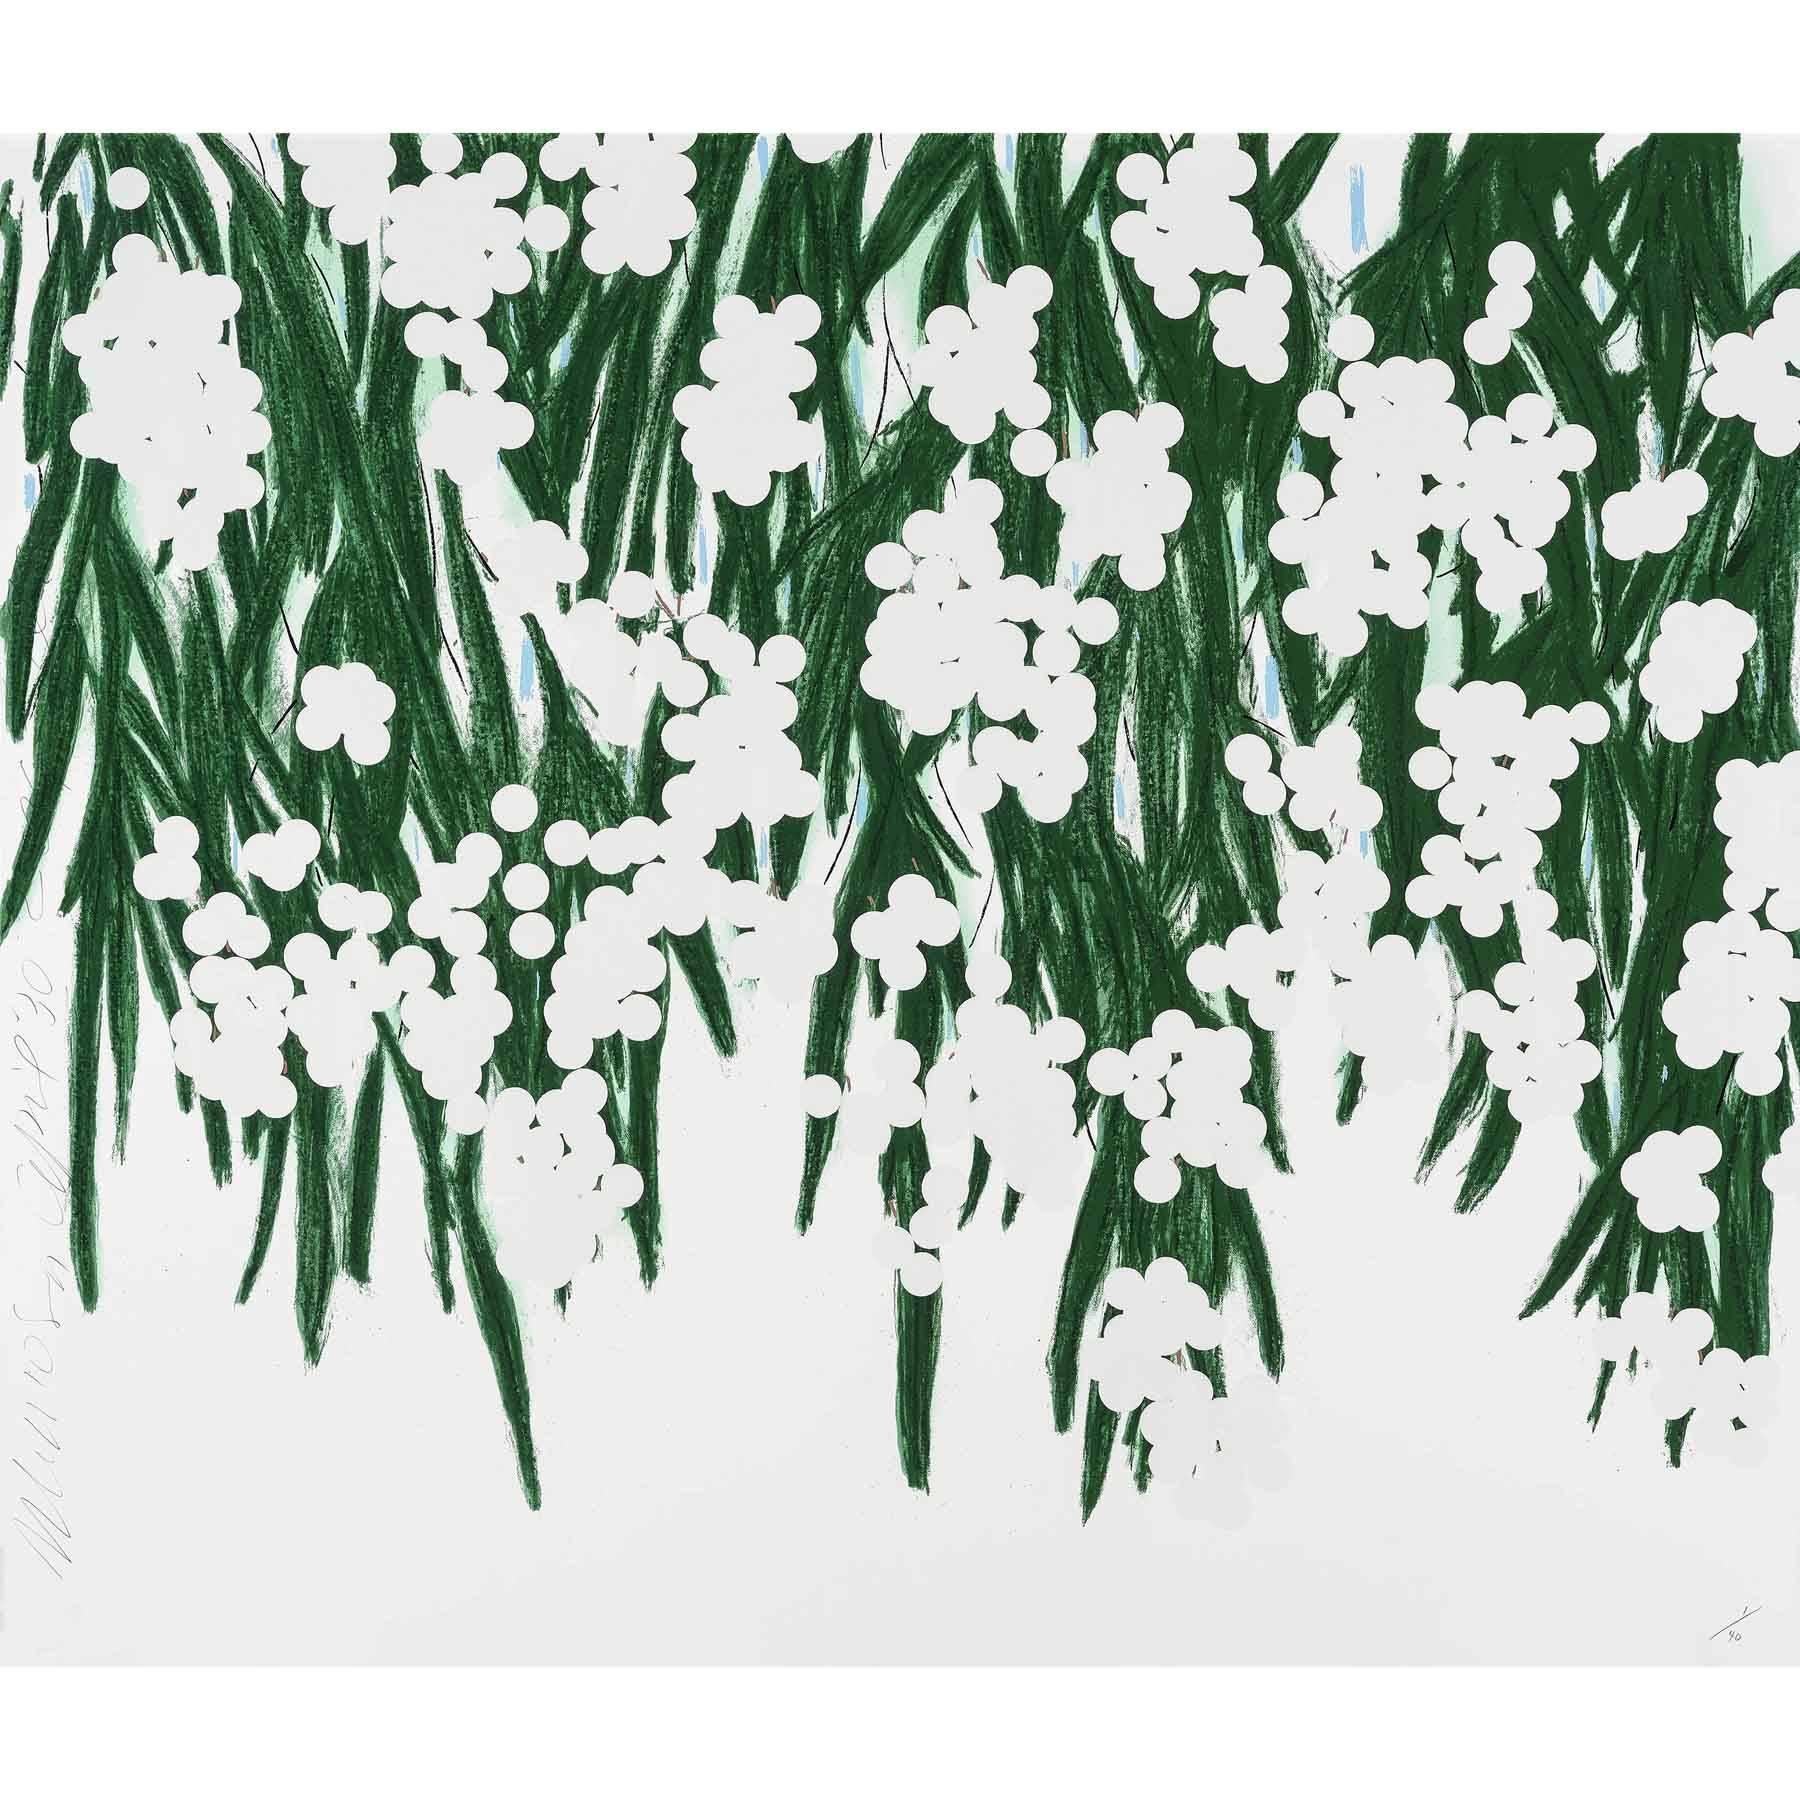 White Mimosa (April 30, 2015) - Print by Donald Sultan